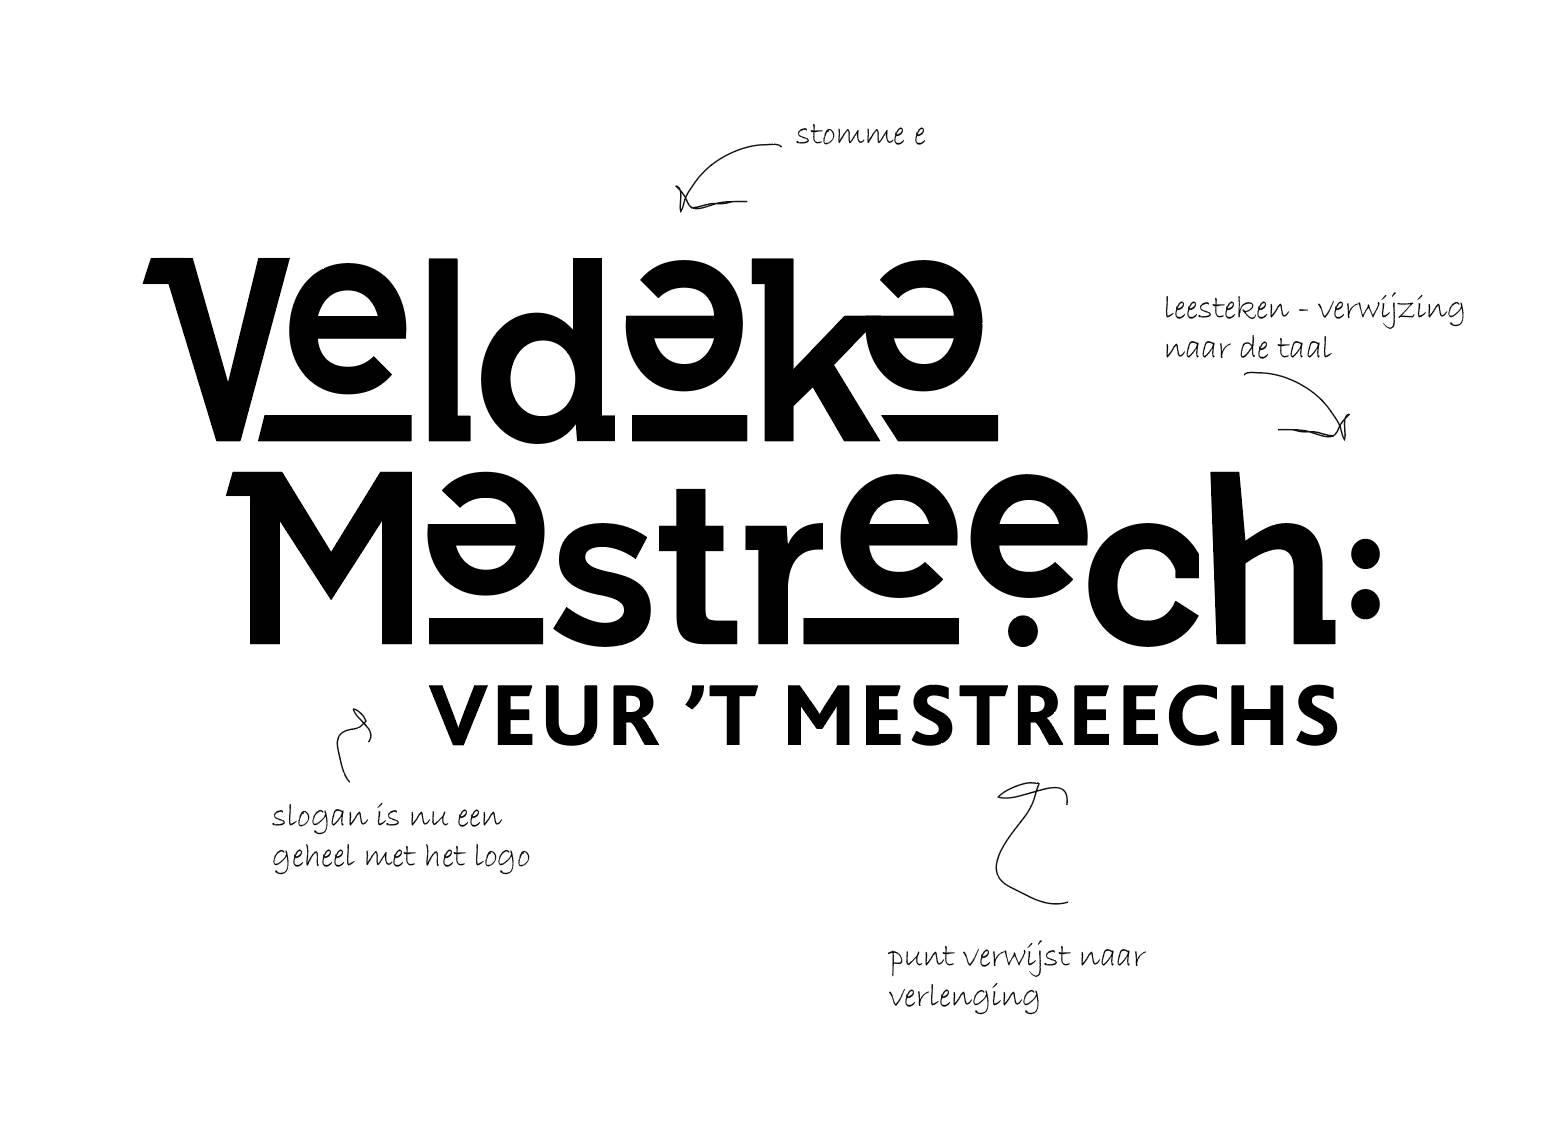 Veldeke Mestreech logo